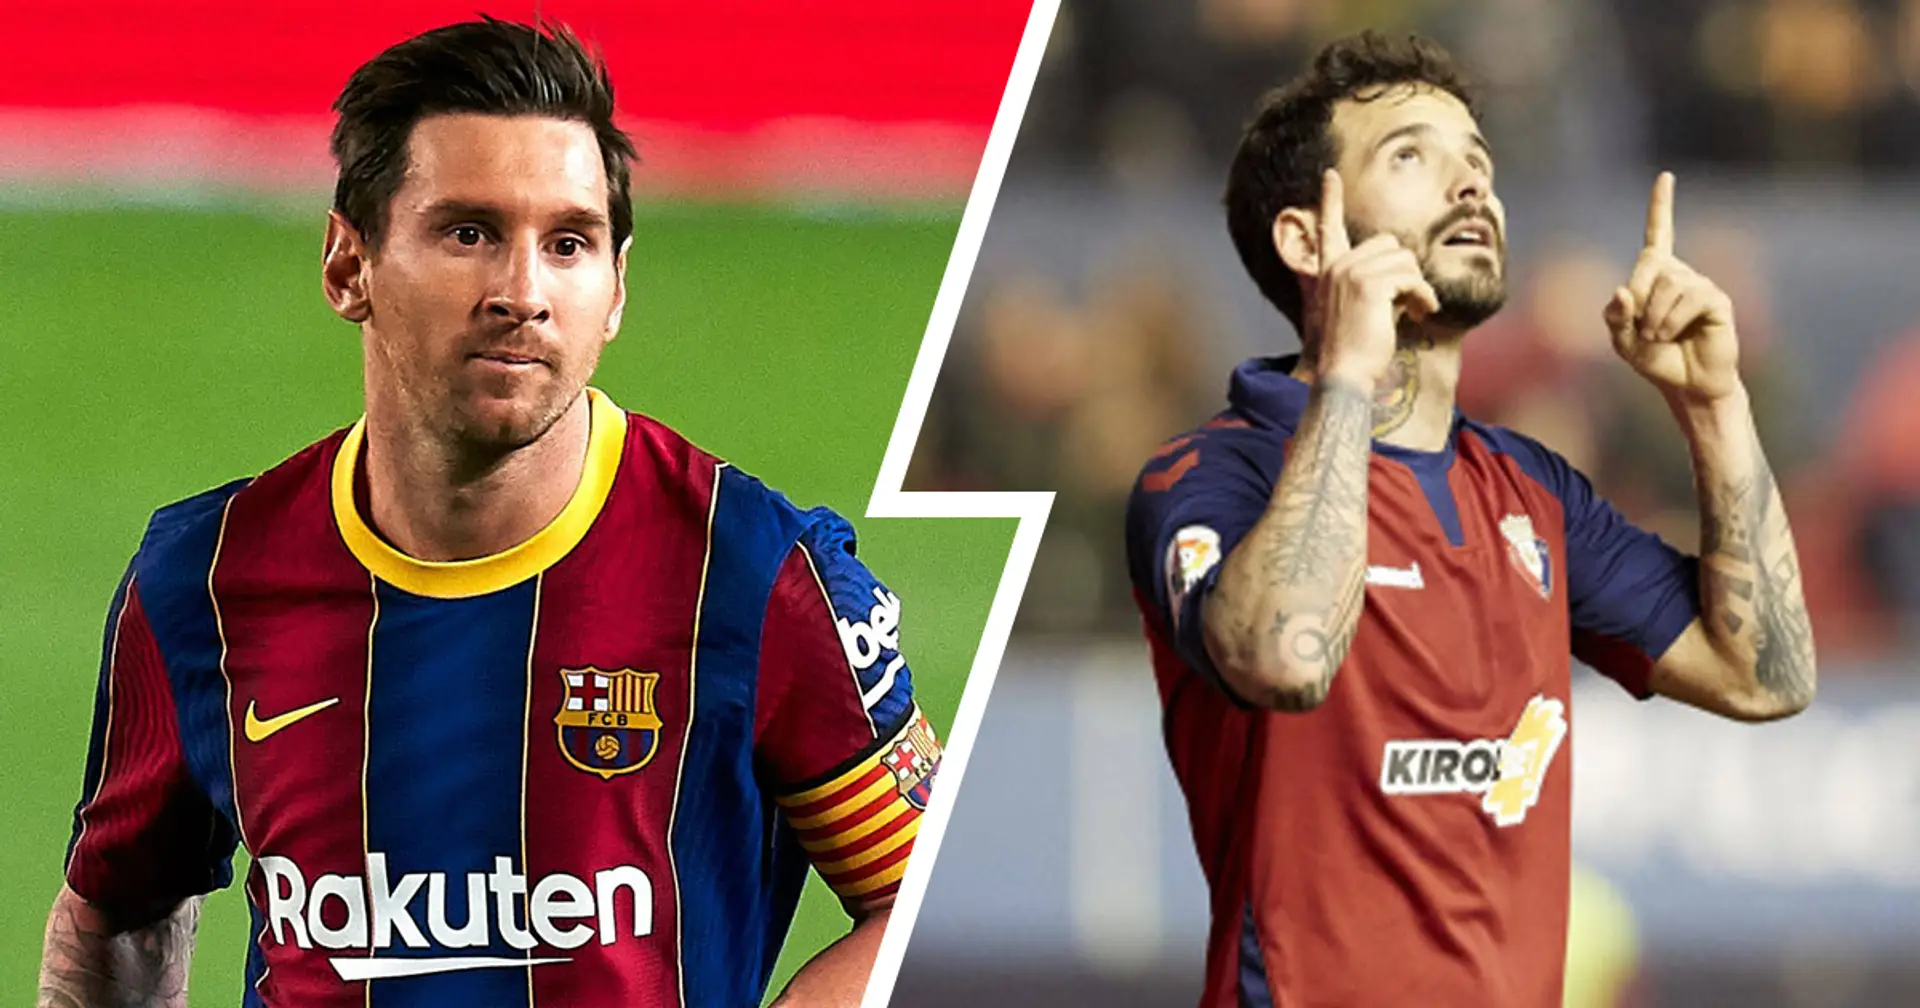 Osasuna vs Barcelona: team news, probable lineups, score predictions and more – preview